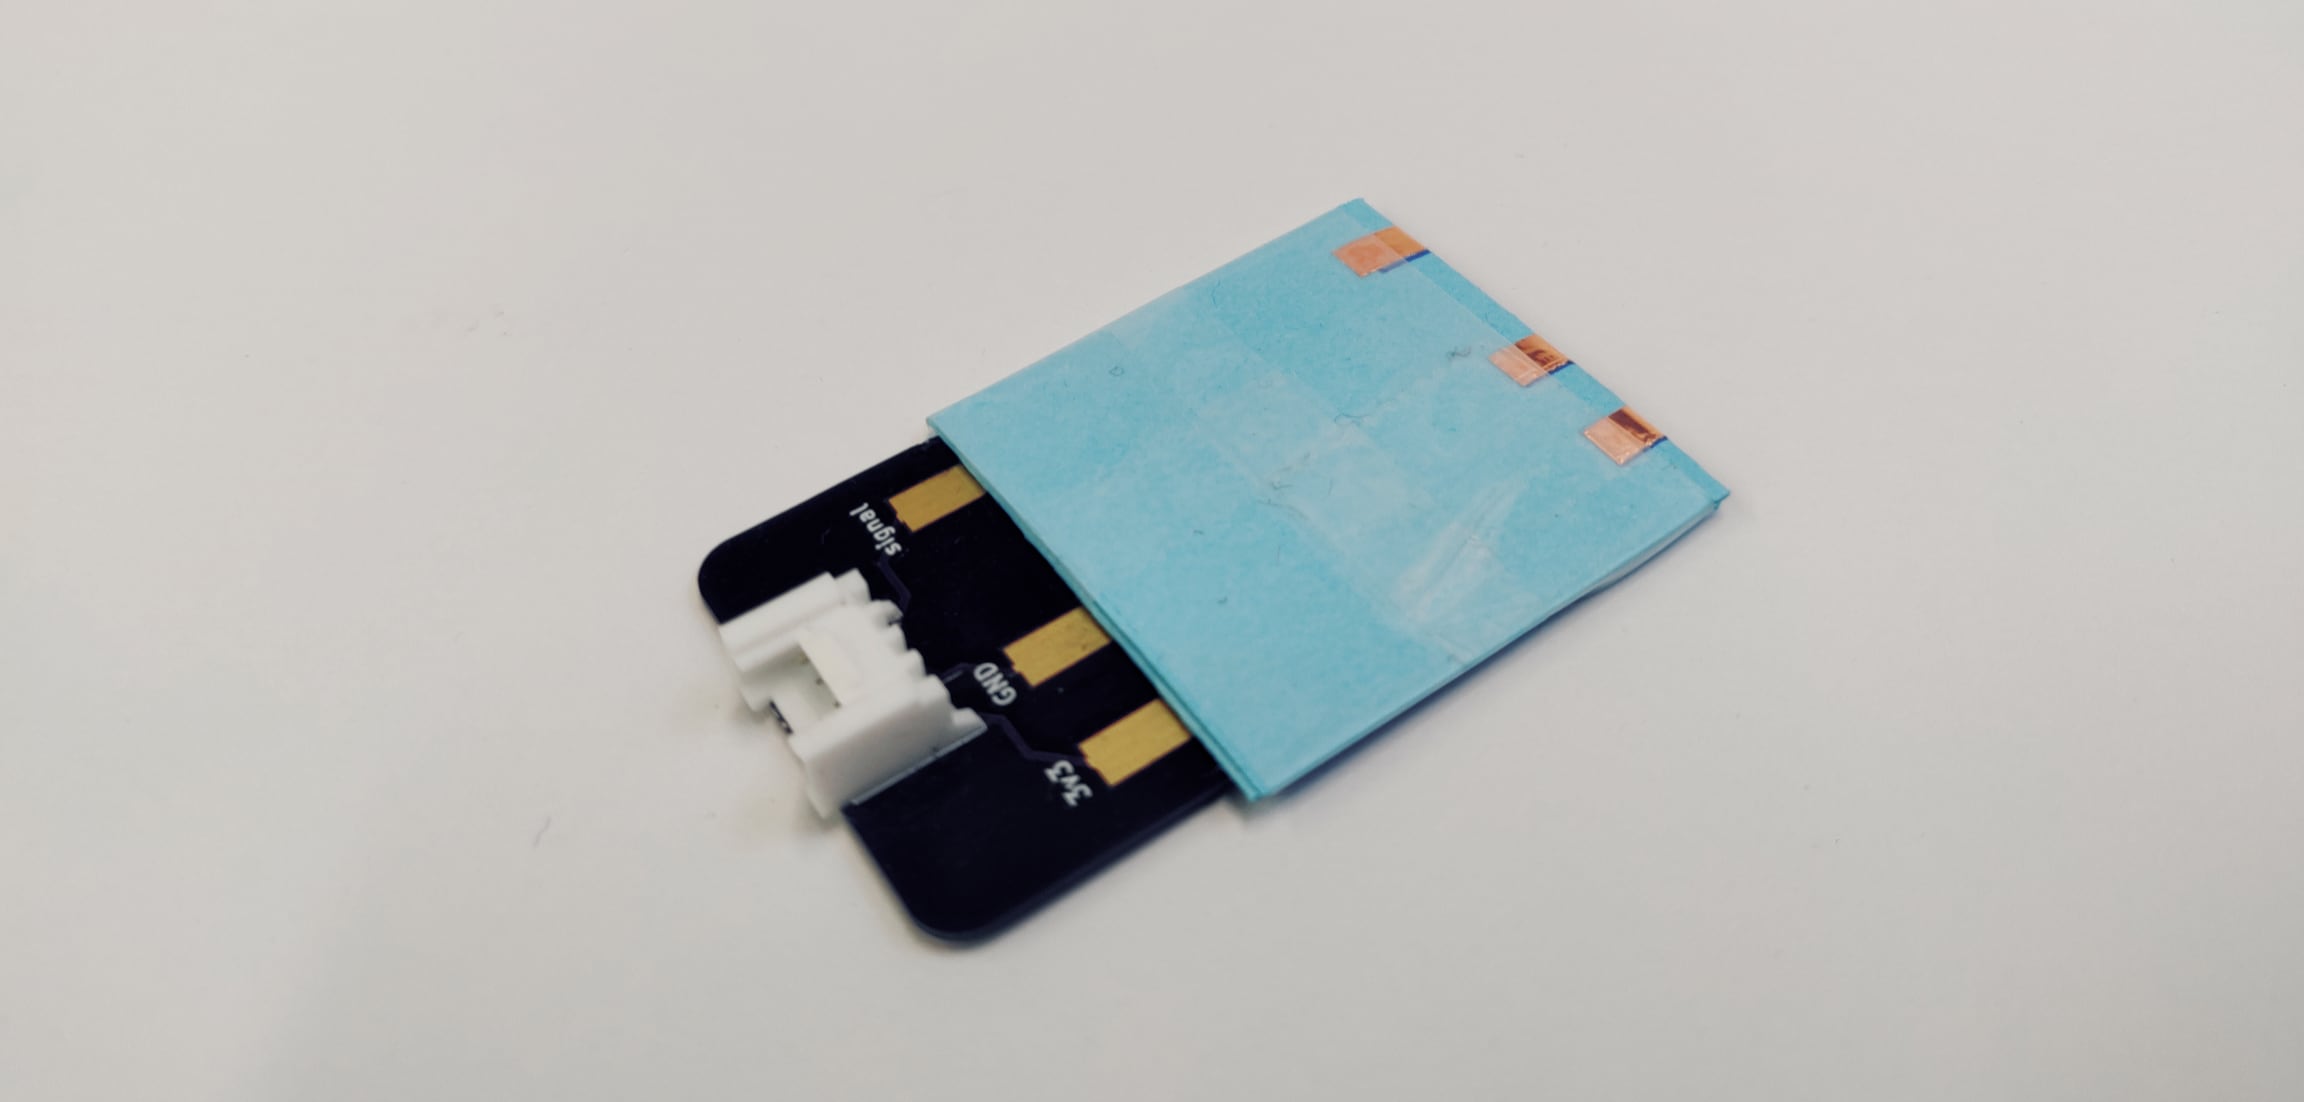 Photo of Analog Pocket Connecter.